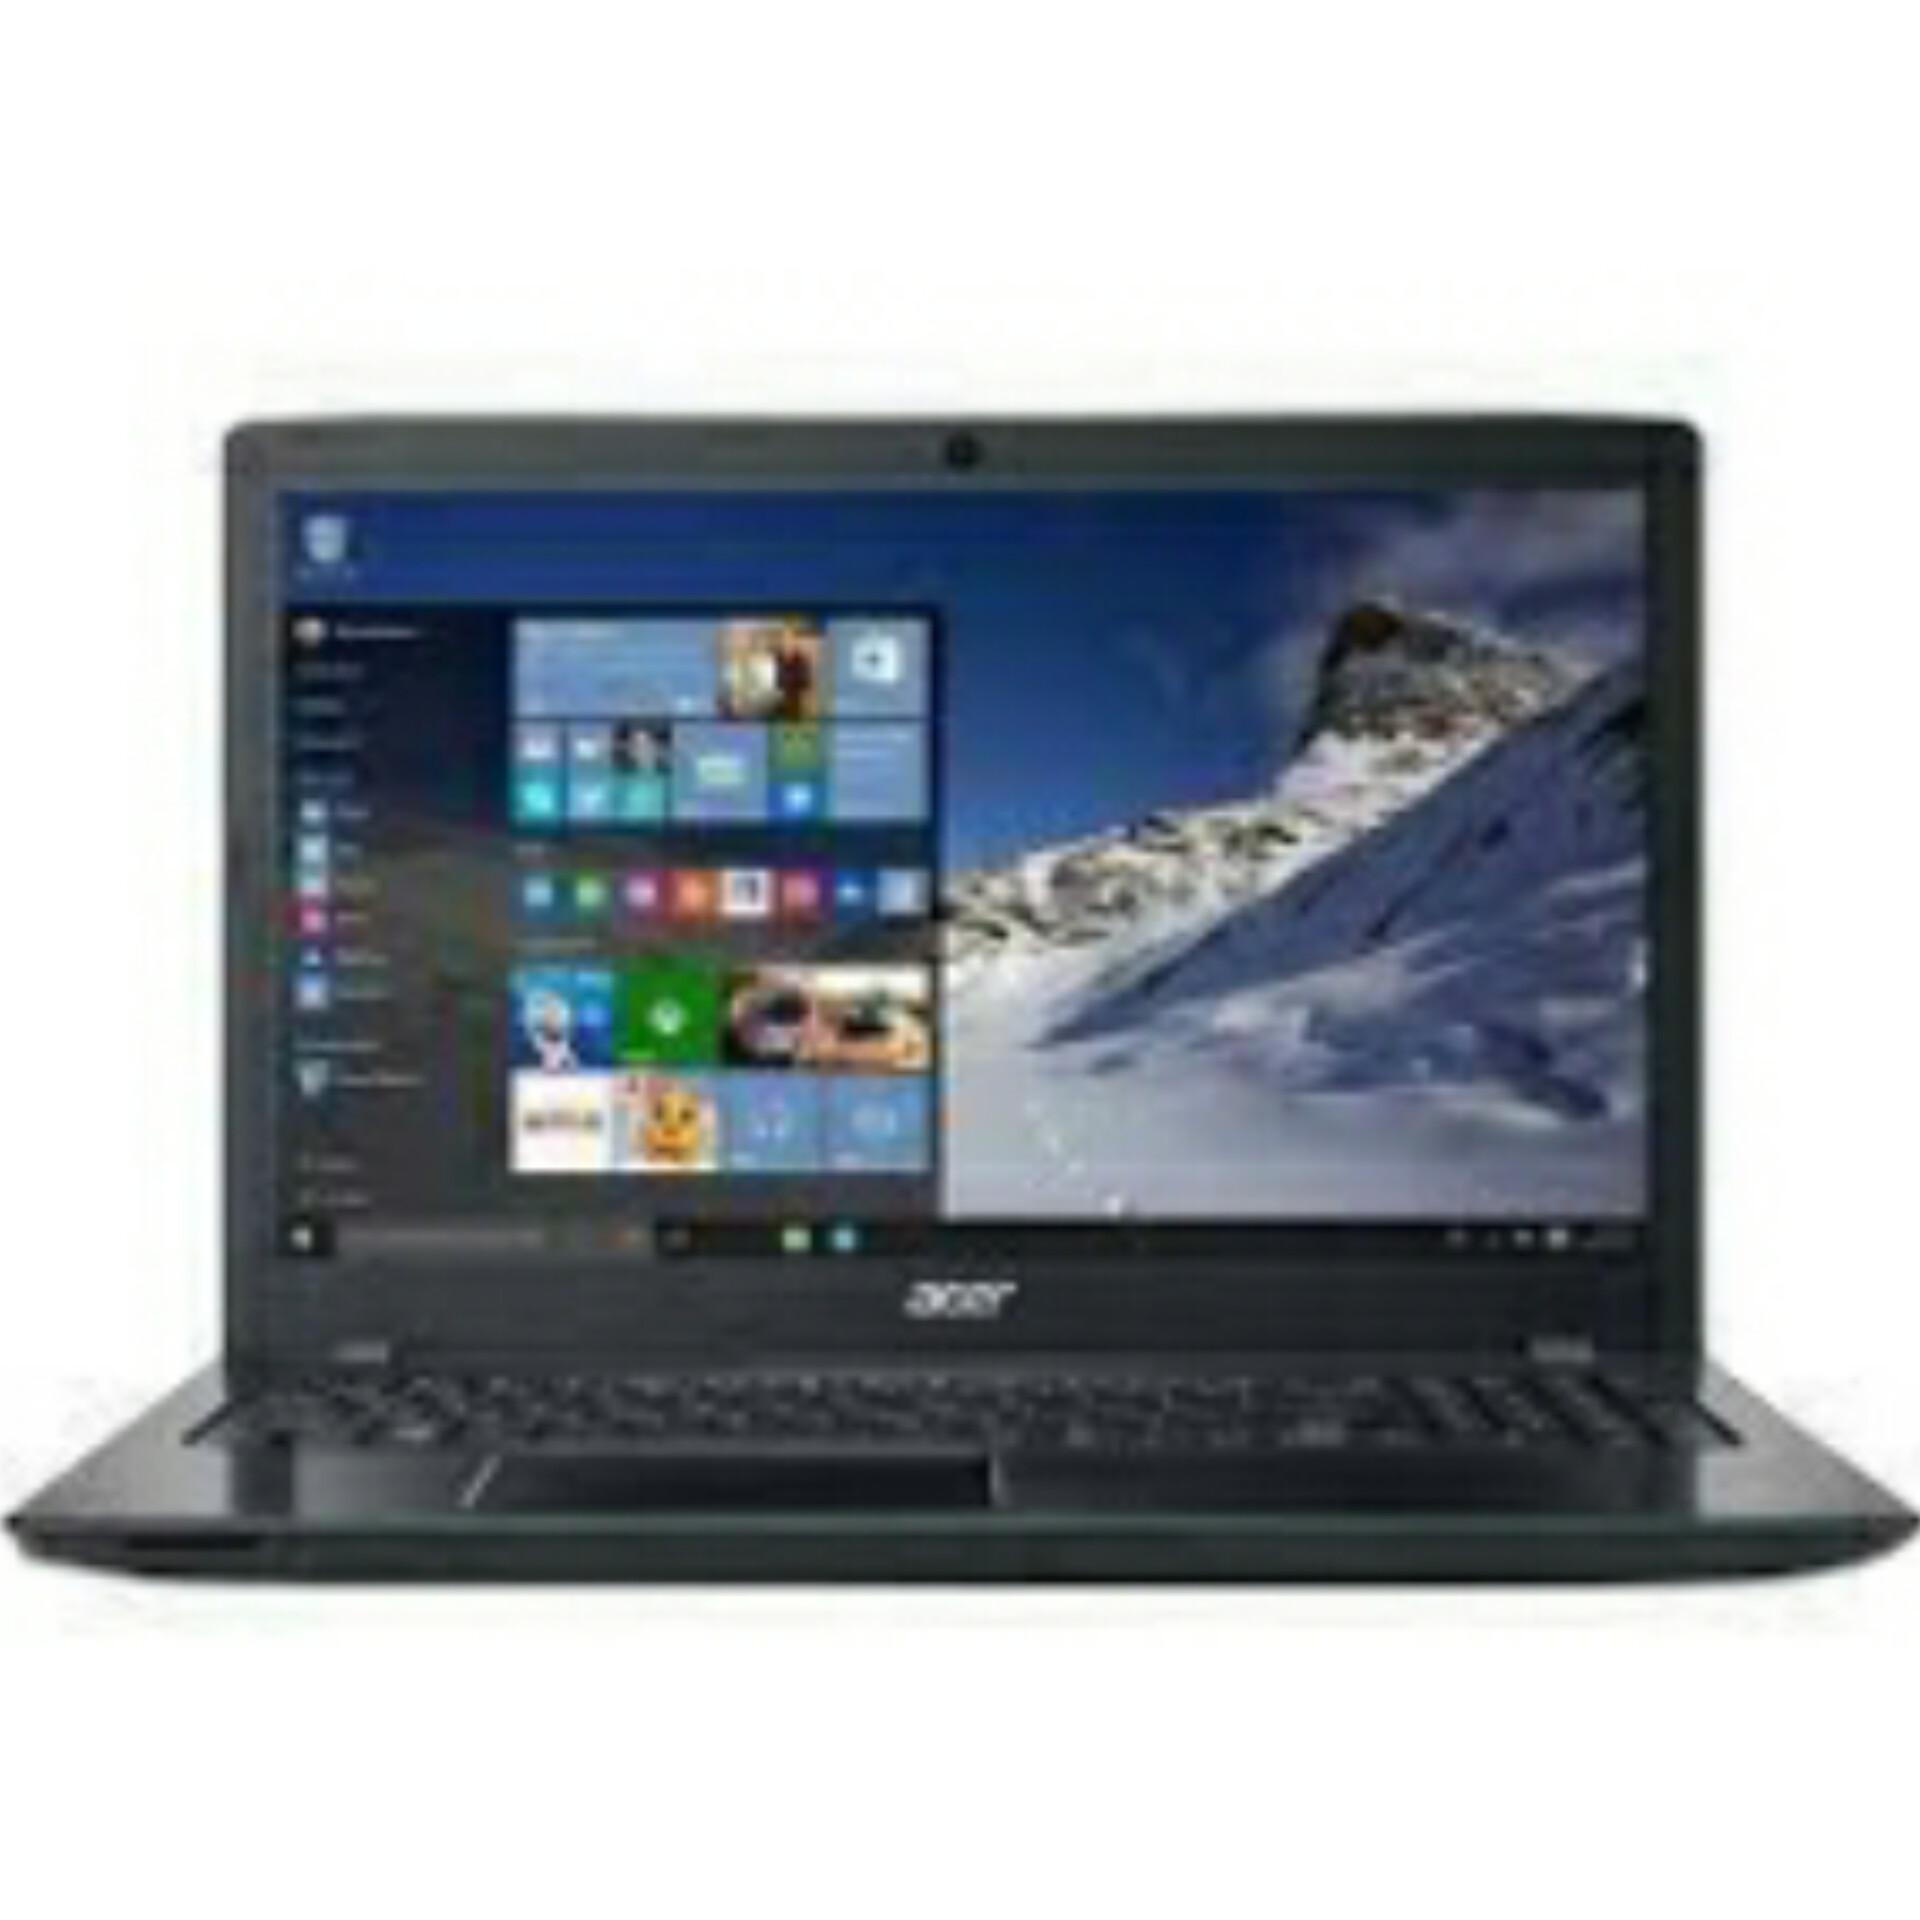 Acer Aspire E5-575 N16Q2 Laptop Price in Pakistan